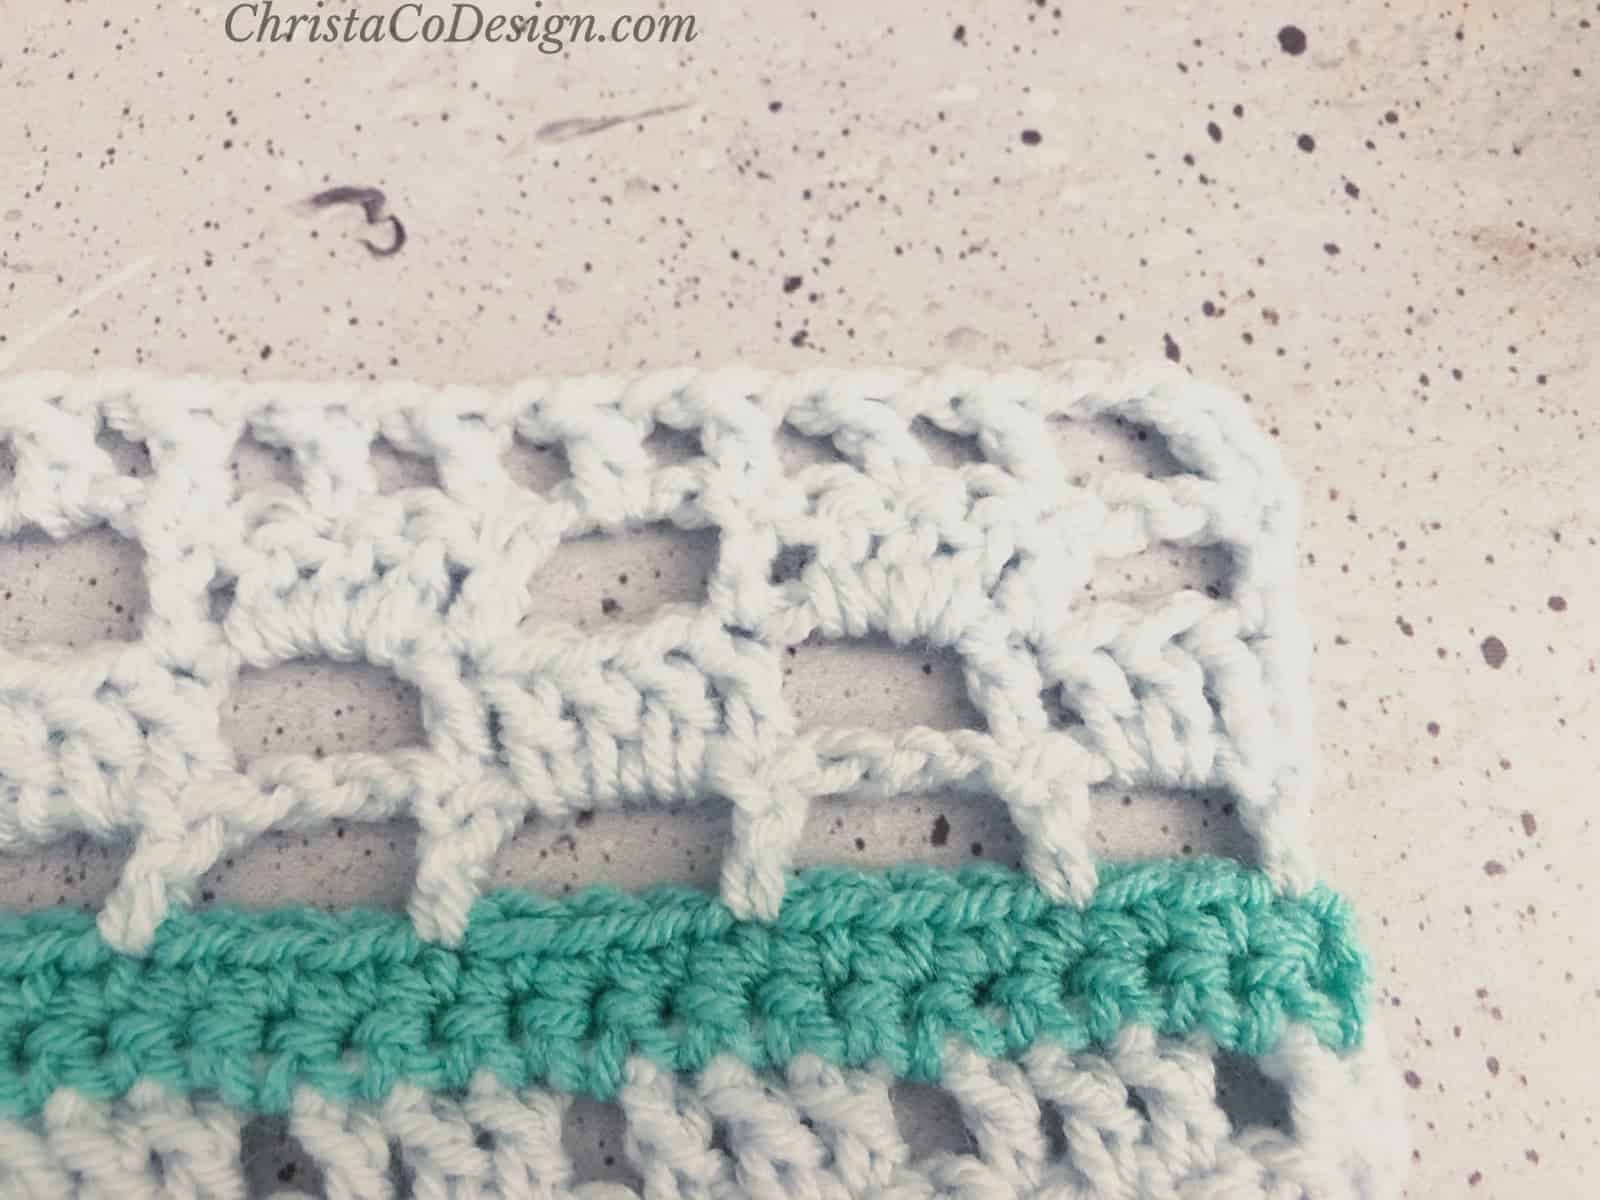 Filet crochet row 18.